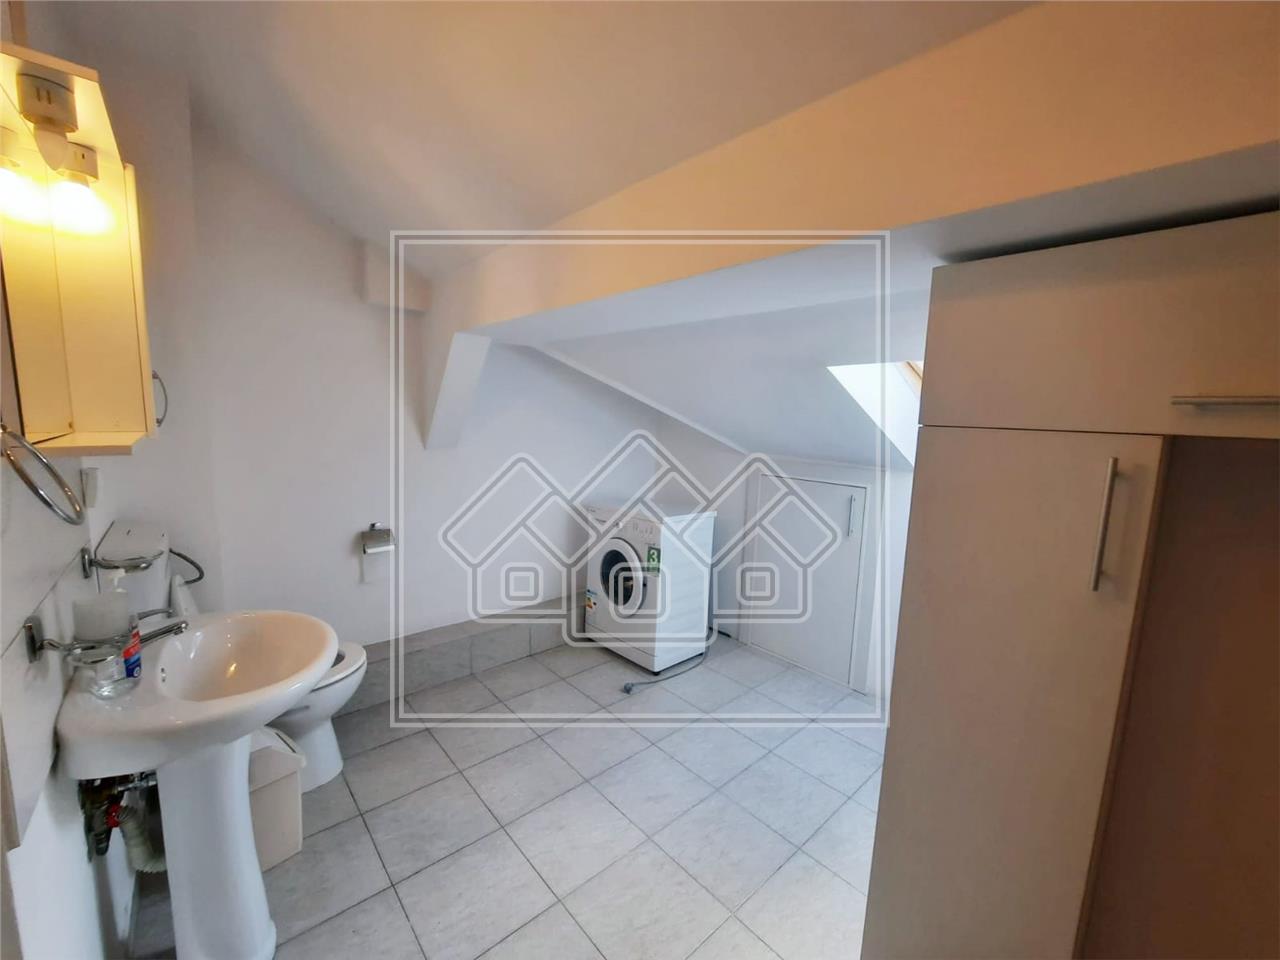 Attic for sale in Sibiu - 3 rooms - 2 bathrooms - Strand II area